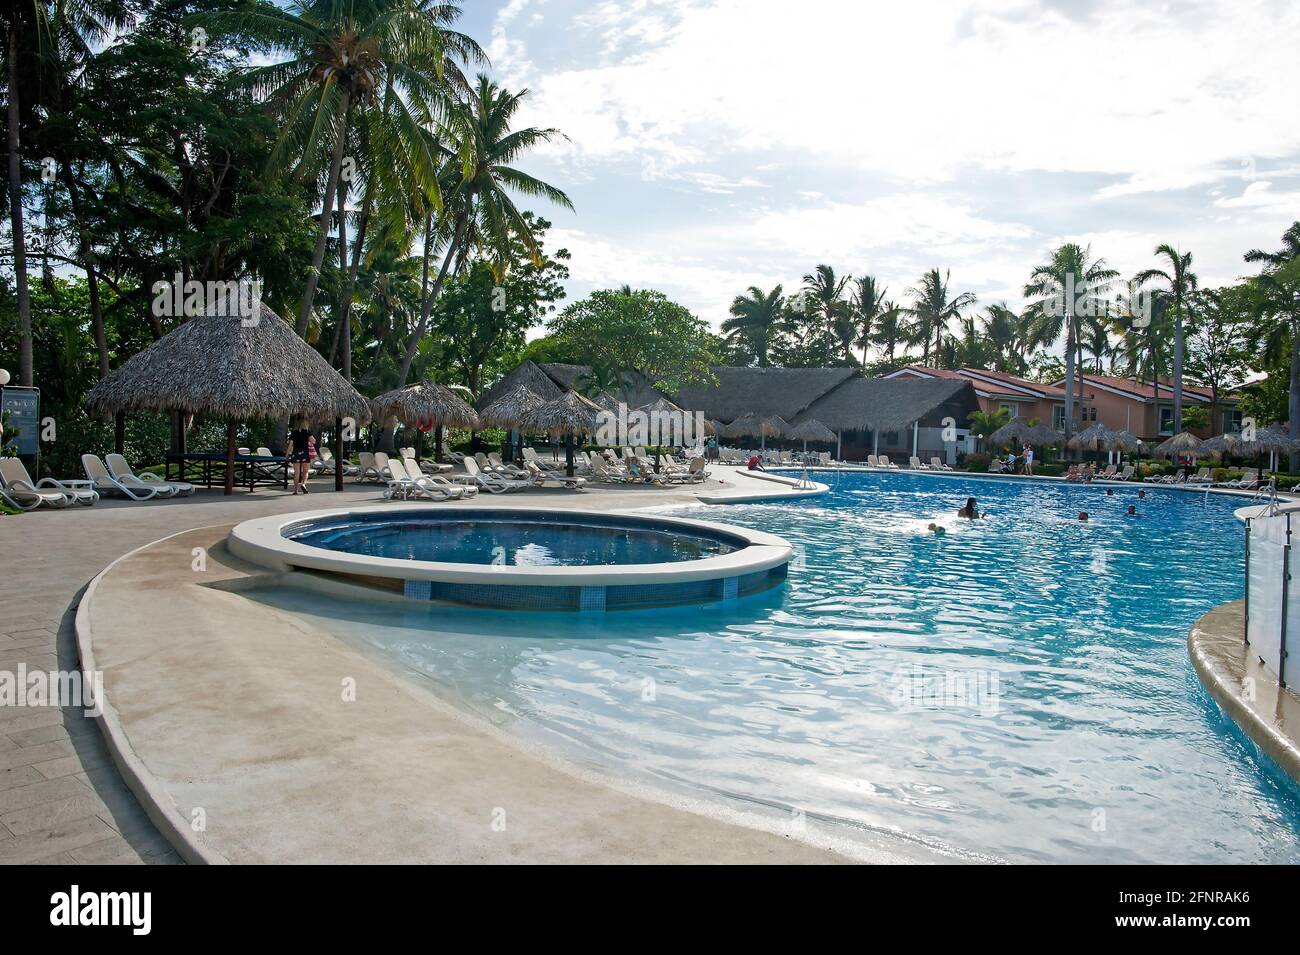 Pool area at the resort in Tamarindo, Costa Rica Stock Photo